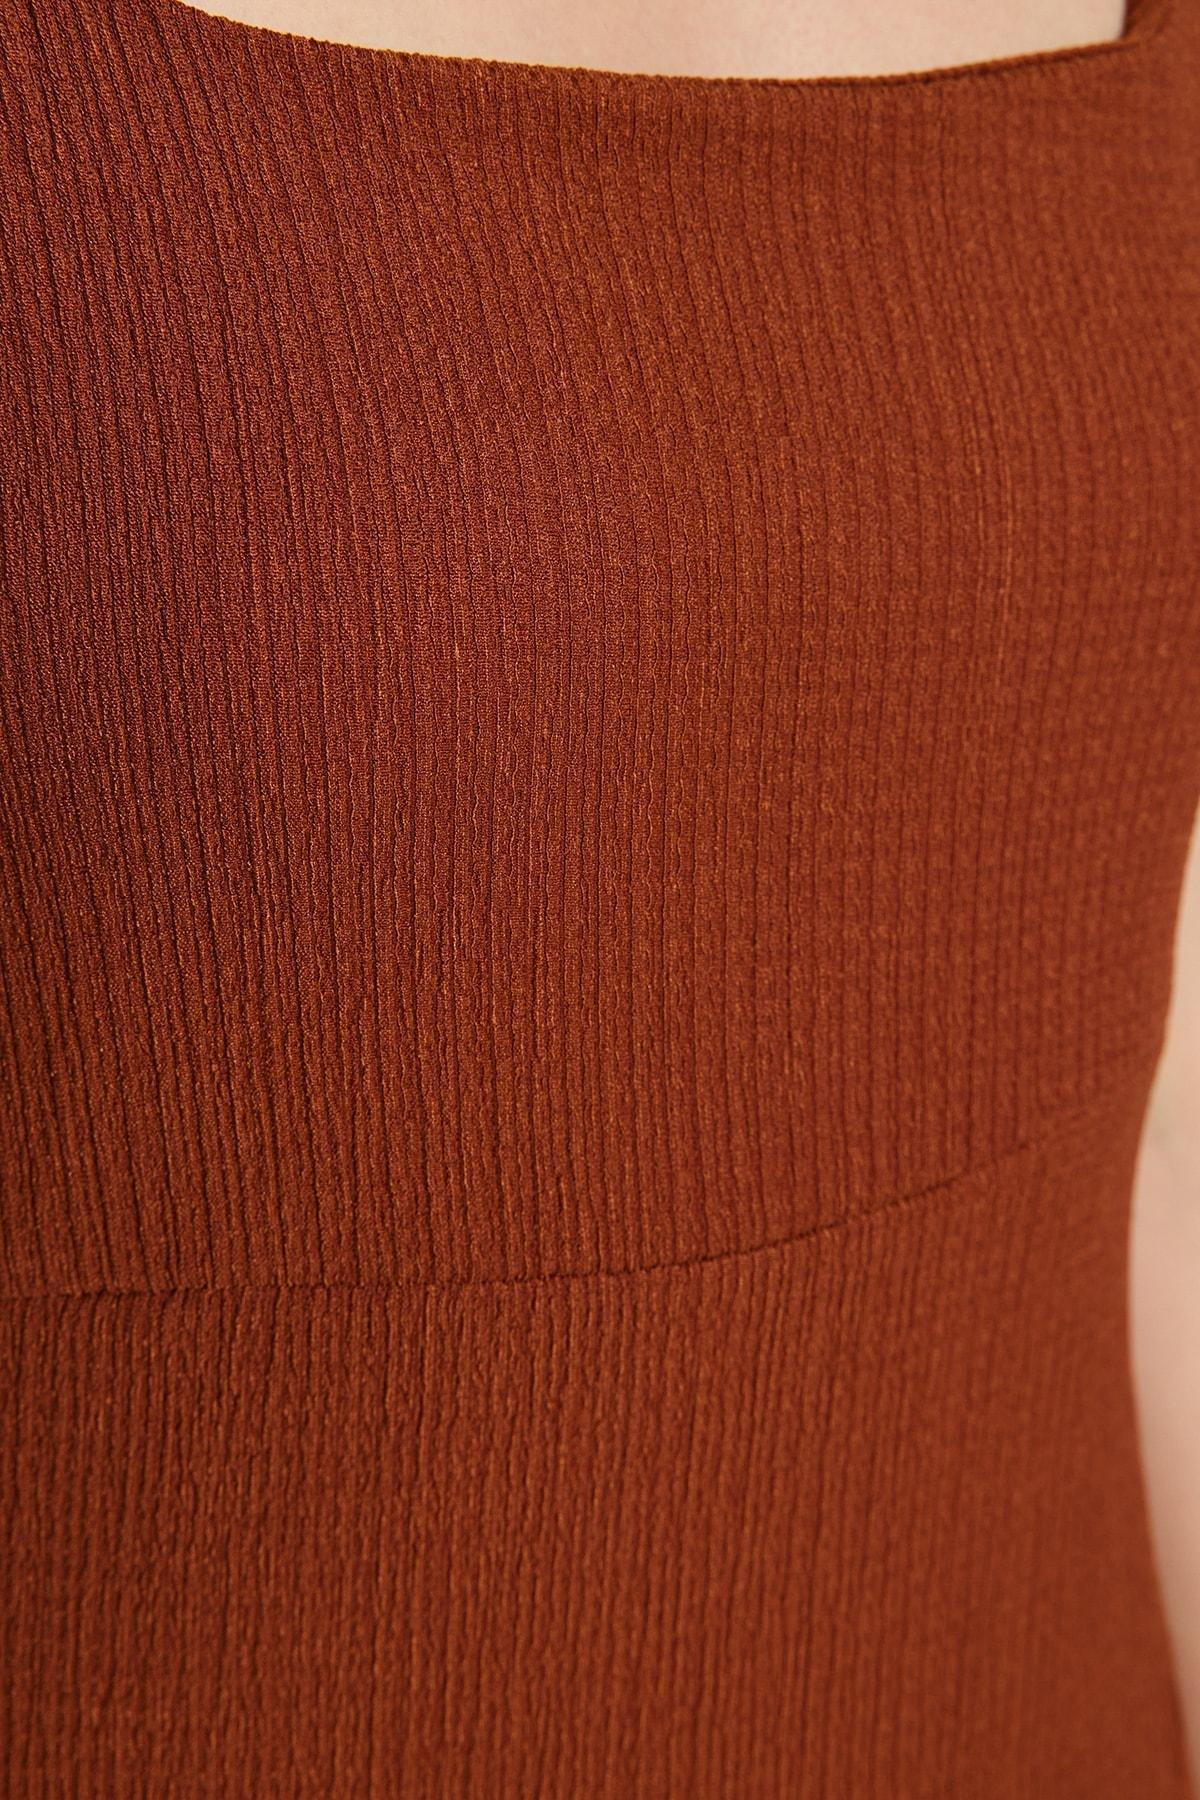 Trendyol - Brown Square Collar A-Line Dress